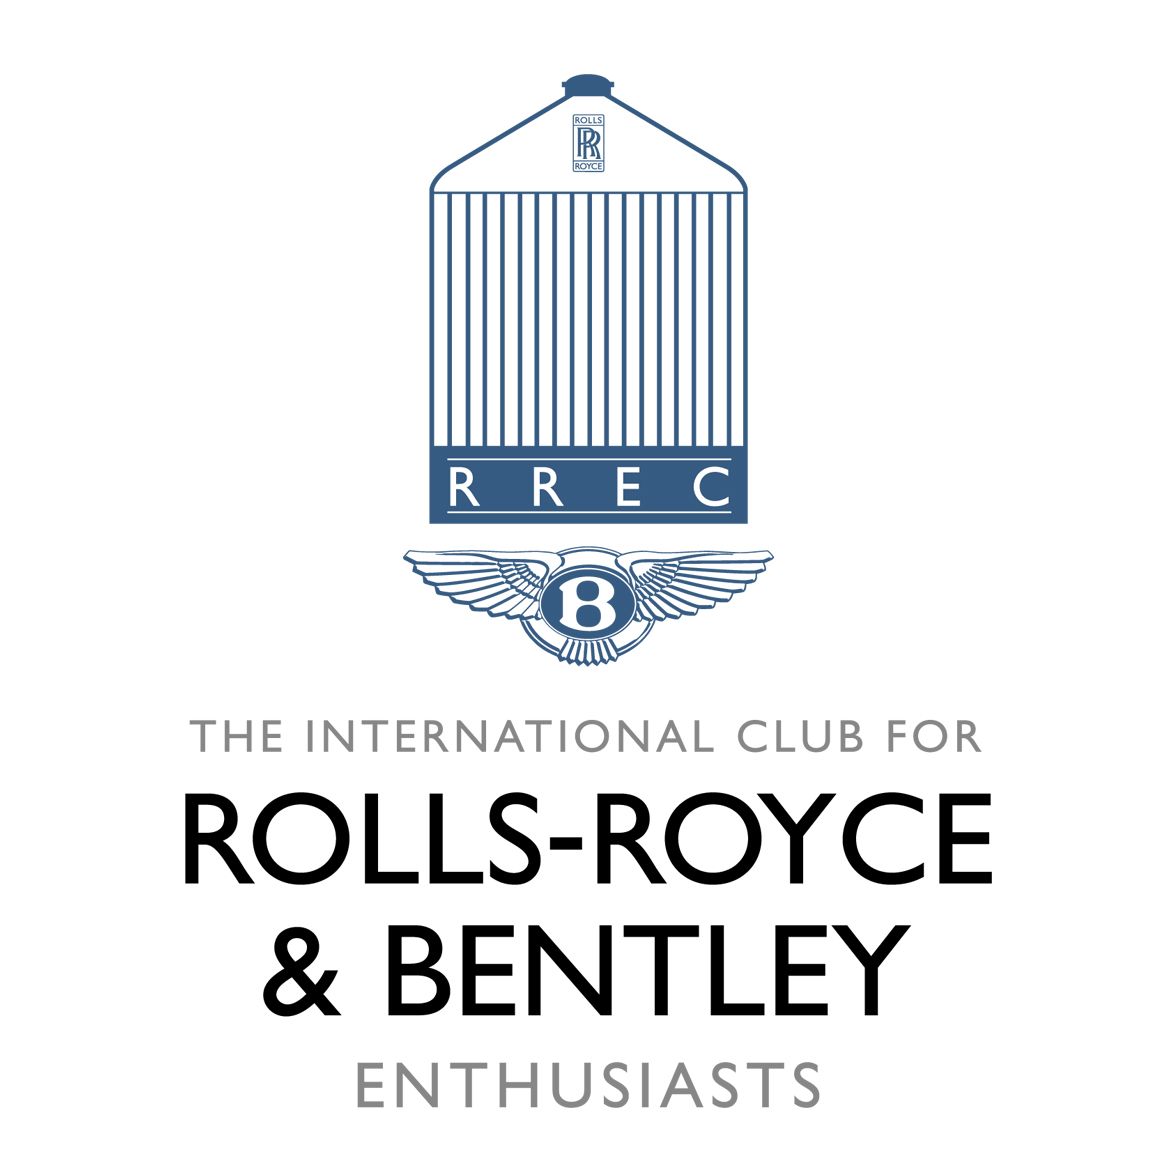 RREC - The International Club for Rolls-Royce & Bentley Enthusiasts